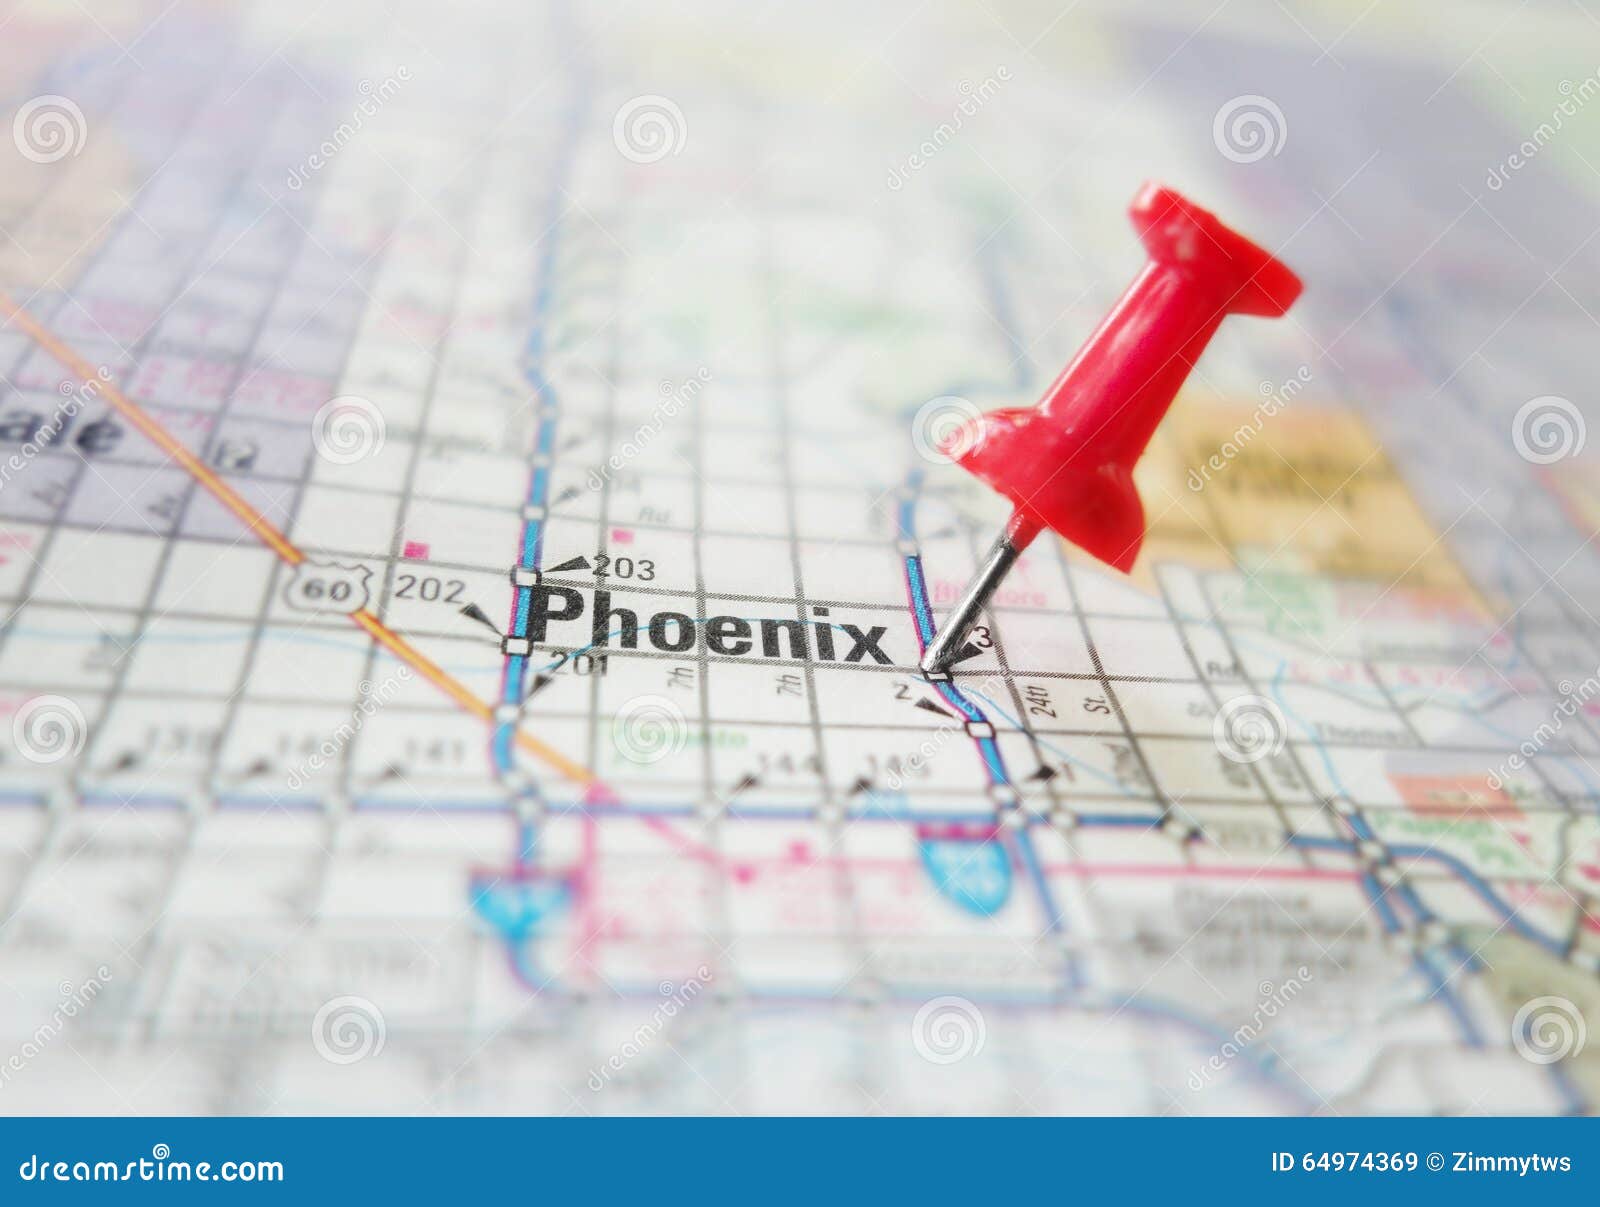 phoenix arizona map